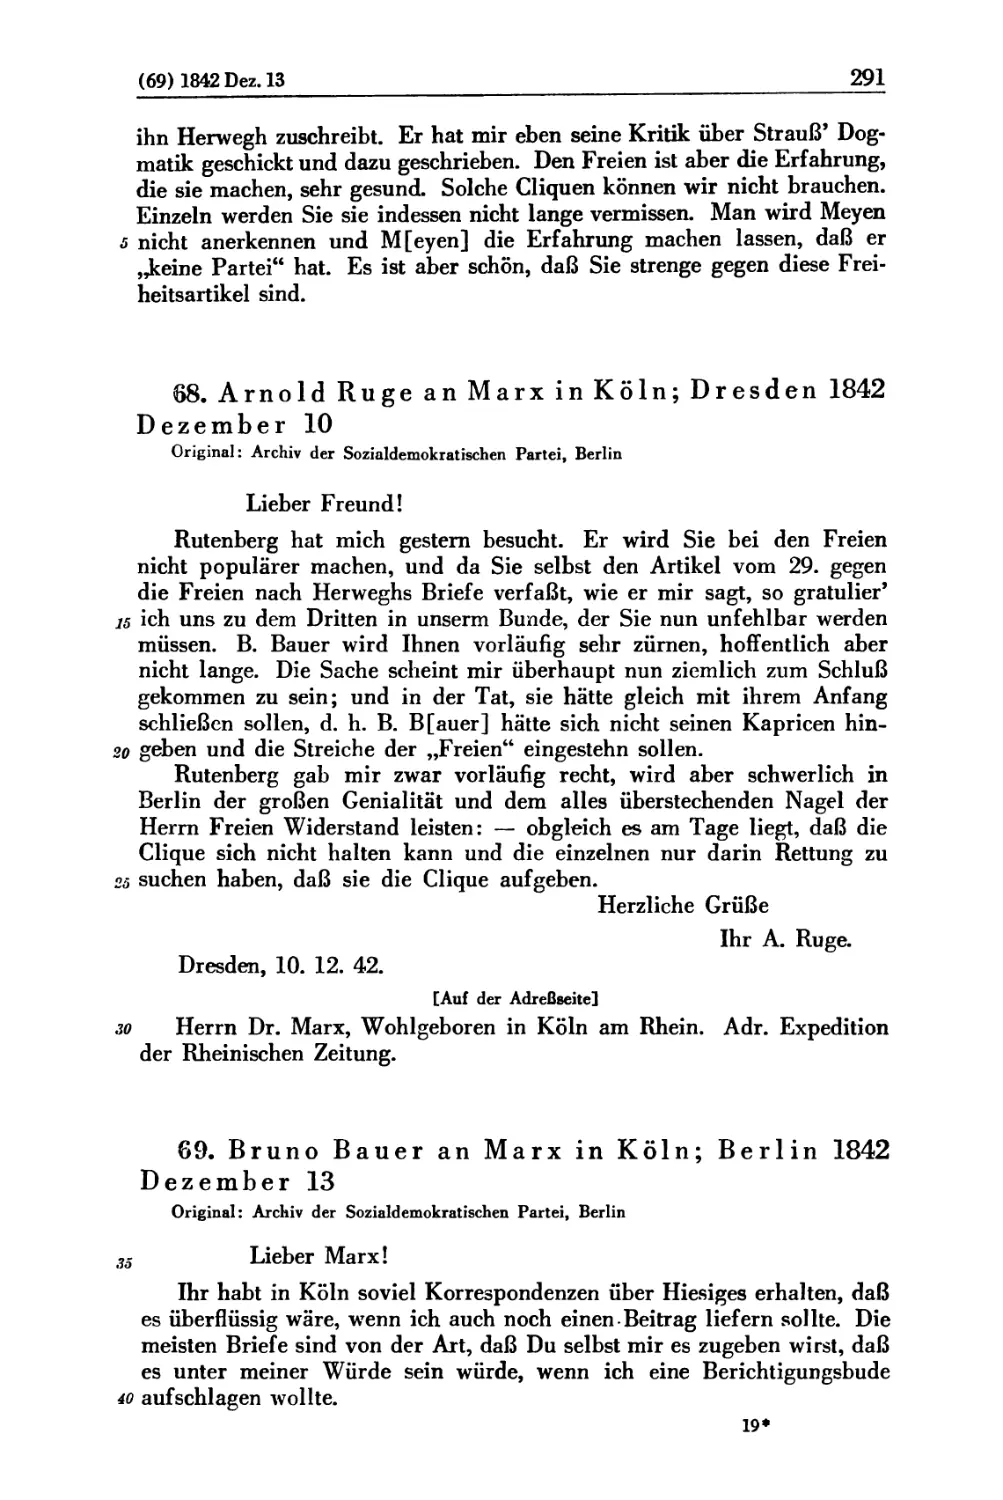 68. Arnold Ruge an Marx in Köln; Dresden 1842 Dezember 10
69. Bruno Bauer an Marx in Köln; Berlin 1842 Dezember 13